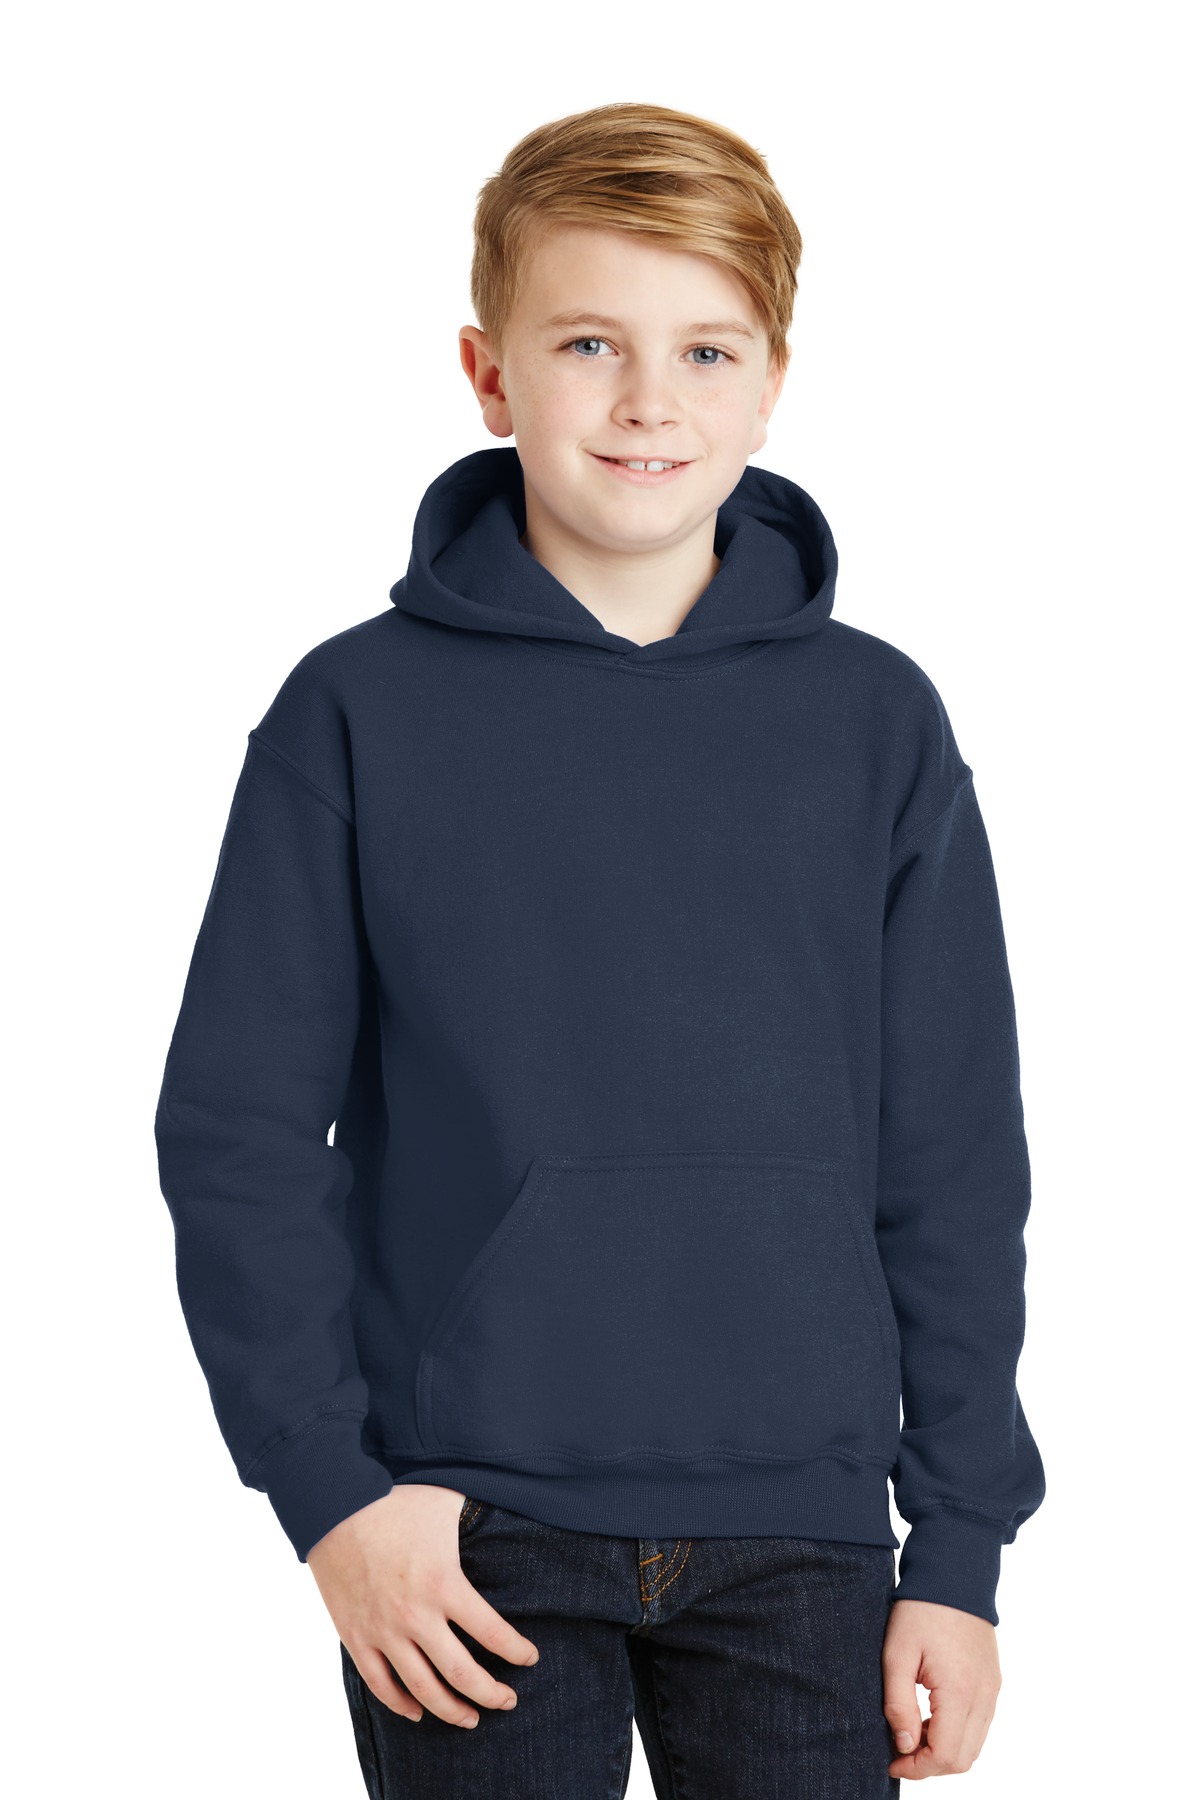 18500B YOUTH Gym Uniform - Embroidered Youth Unisex Hooded Sweatshirt